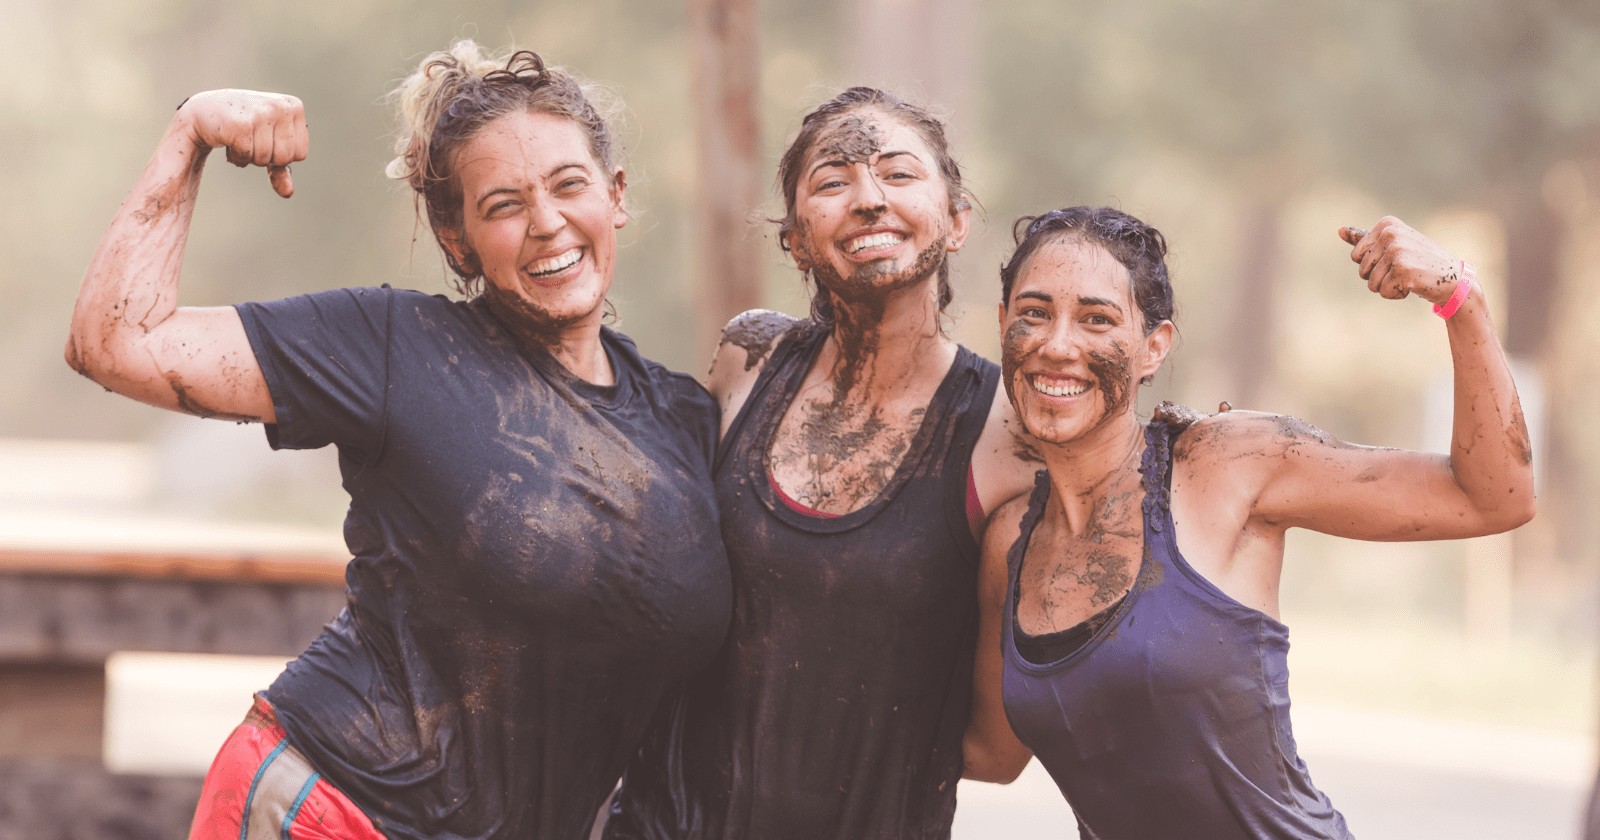 Photo shows three happy women after a challenging marathon.